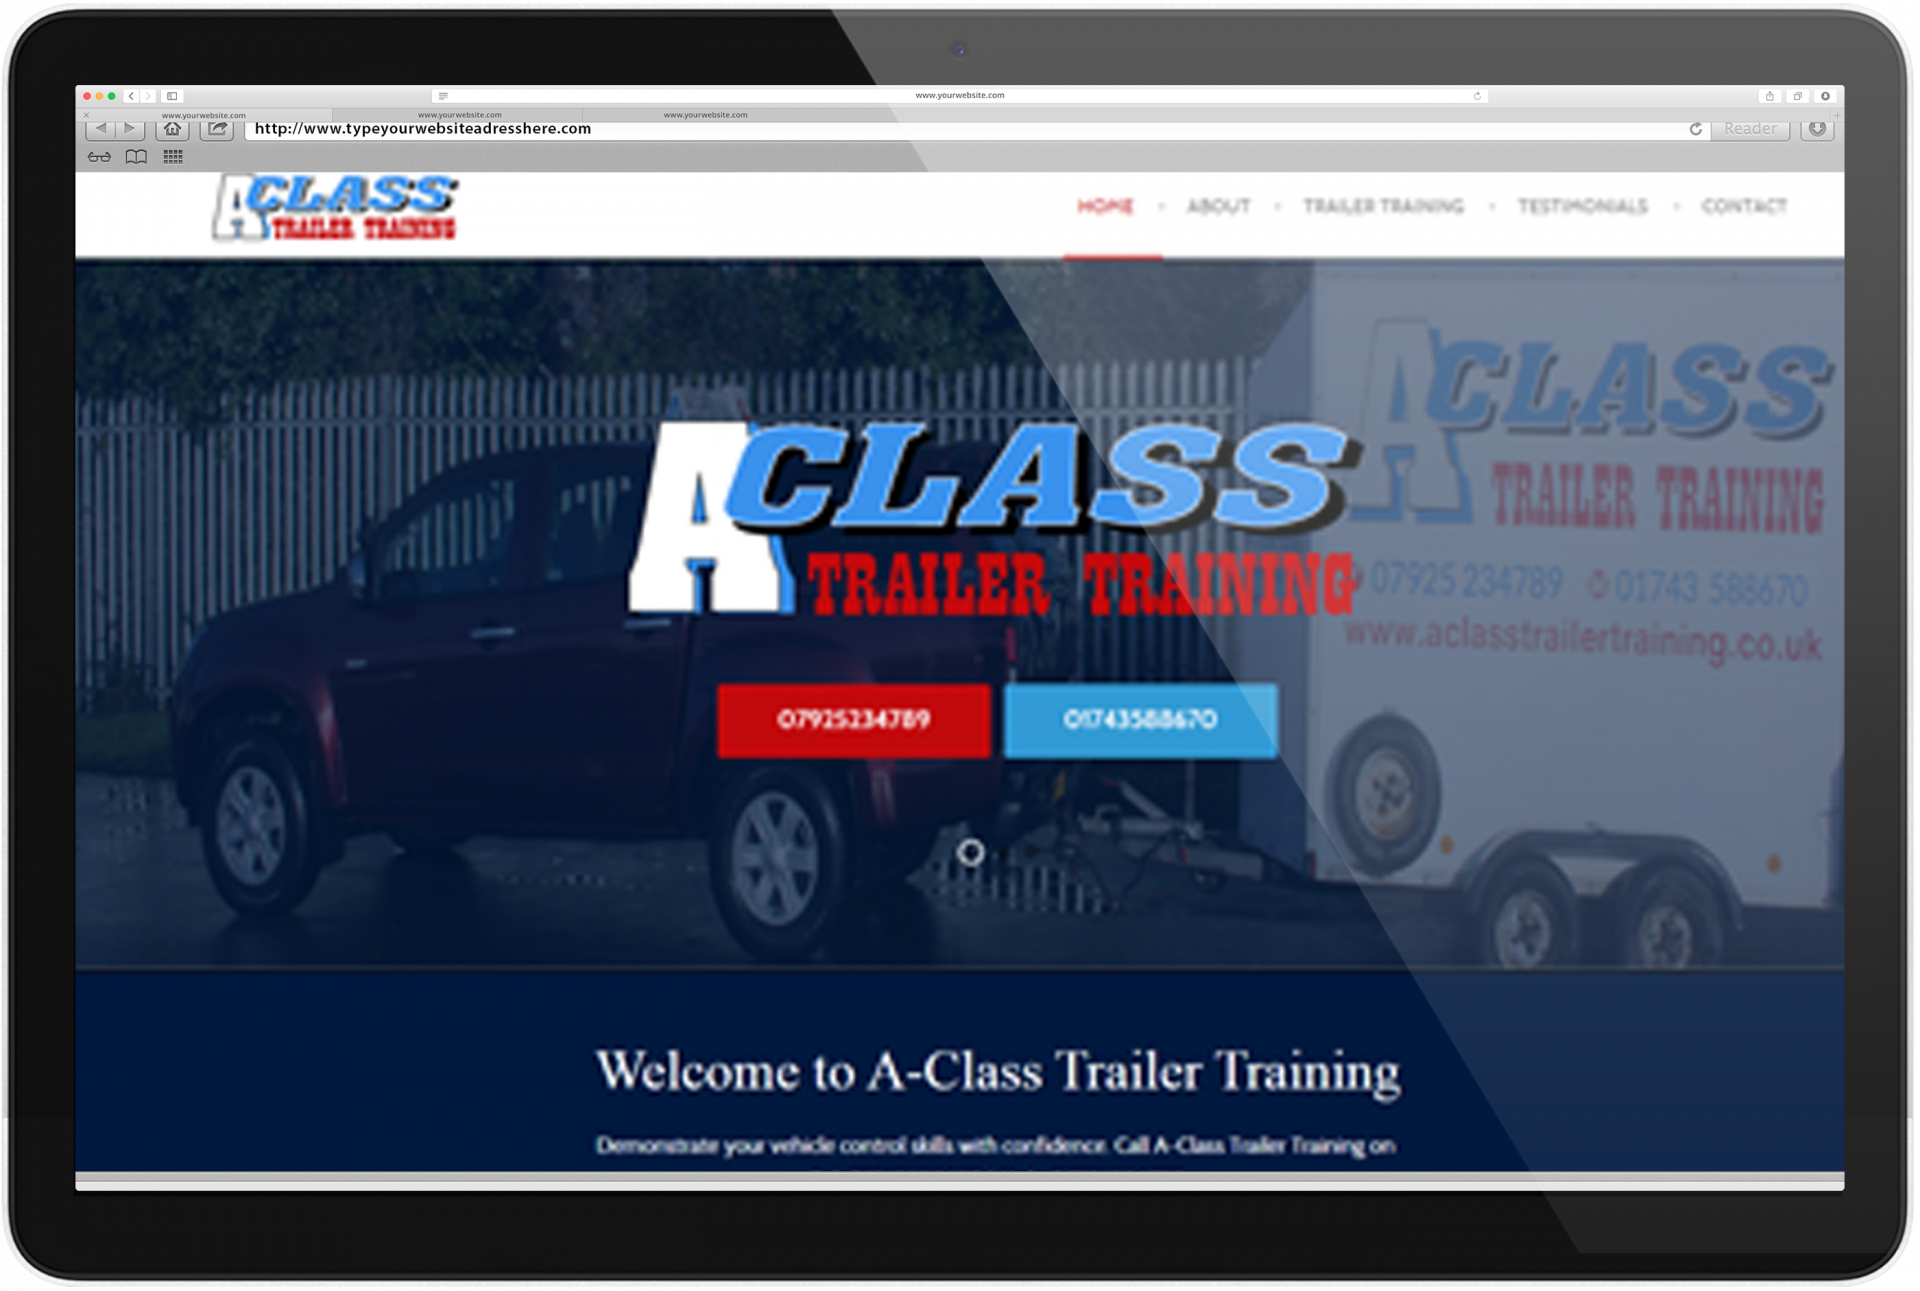 Trailer vehicle control skills training firm